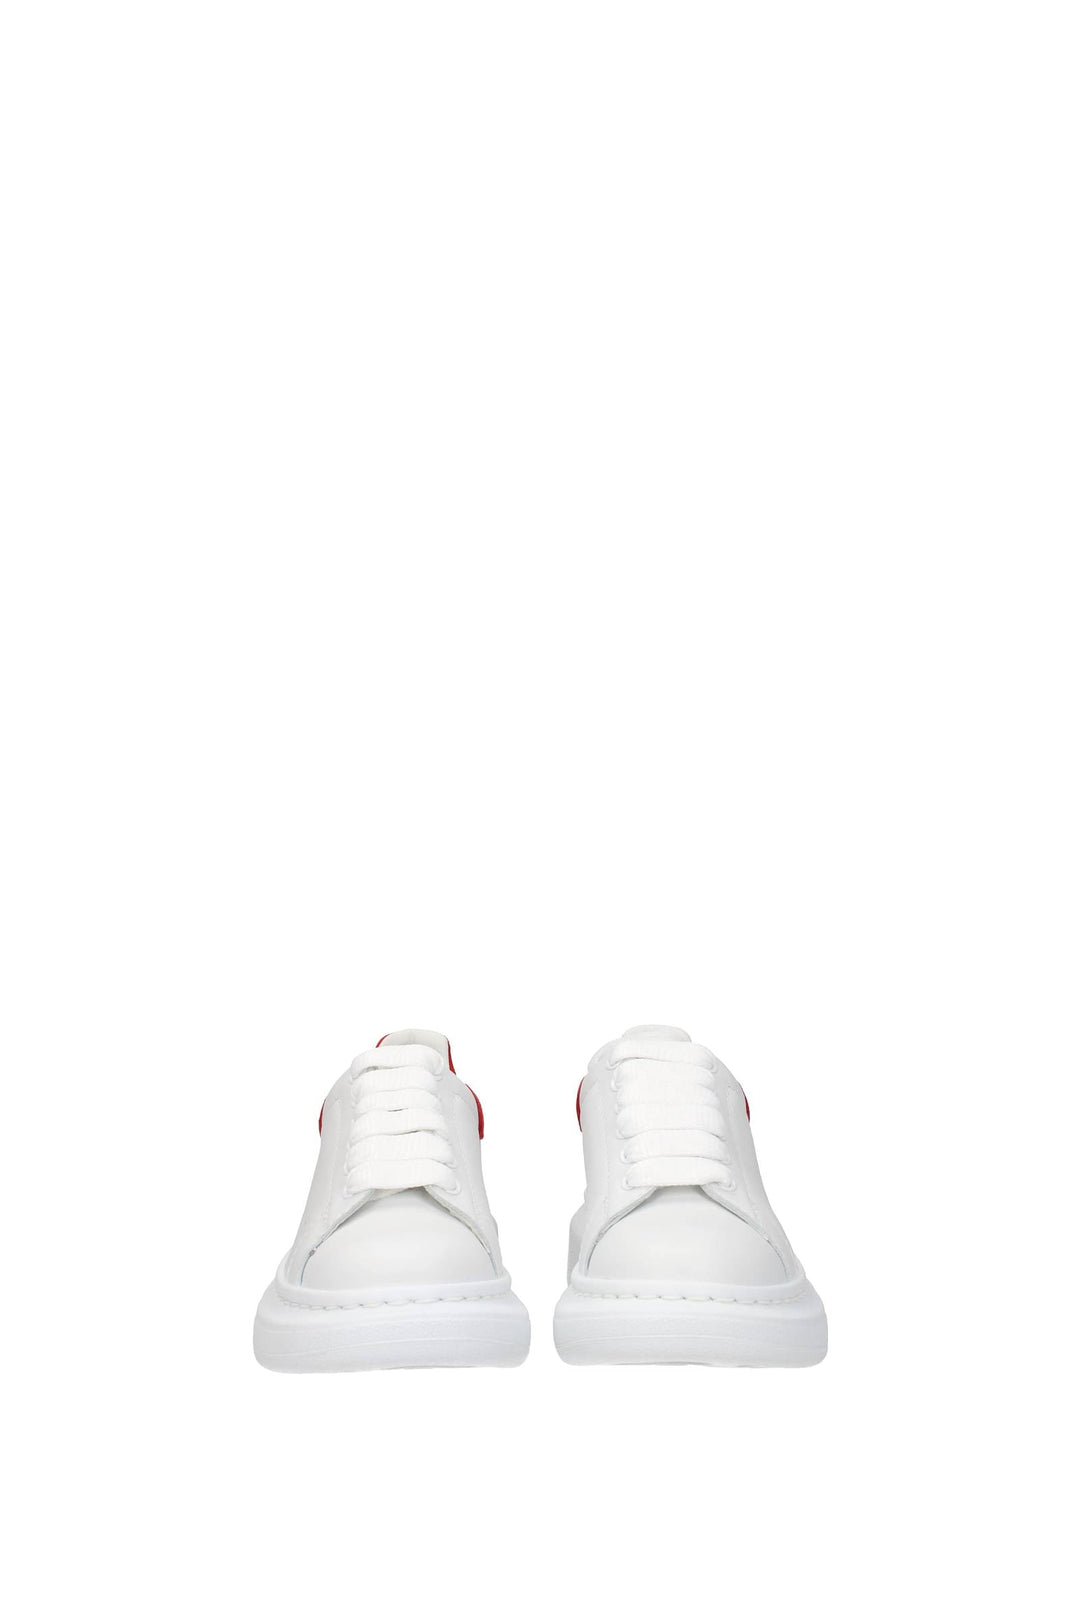 Idee Regalo Sneakers Kids Pelle Bianco Rosso - Alexander McQueen - Uomo